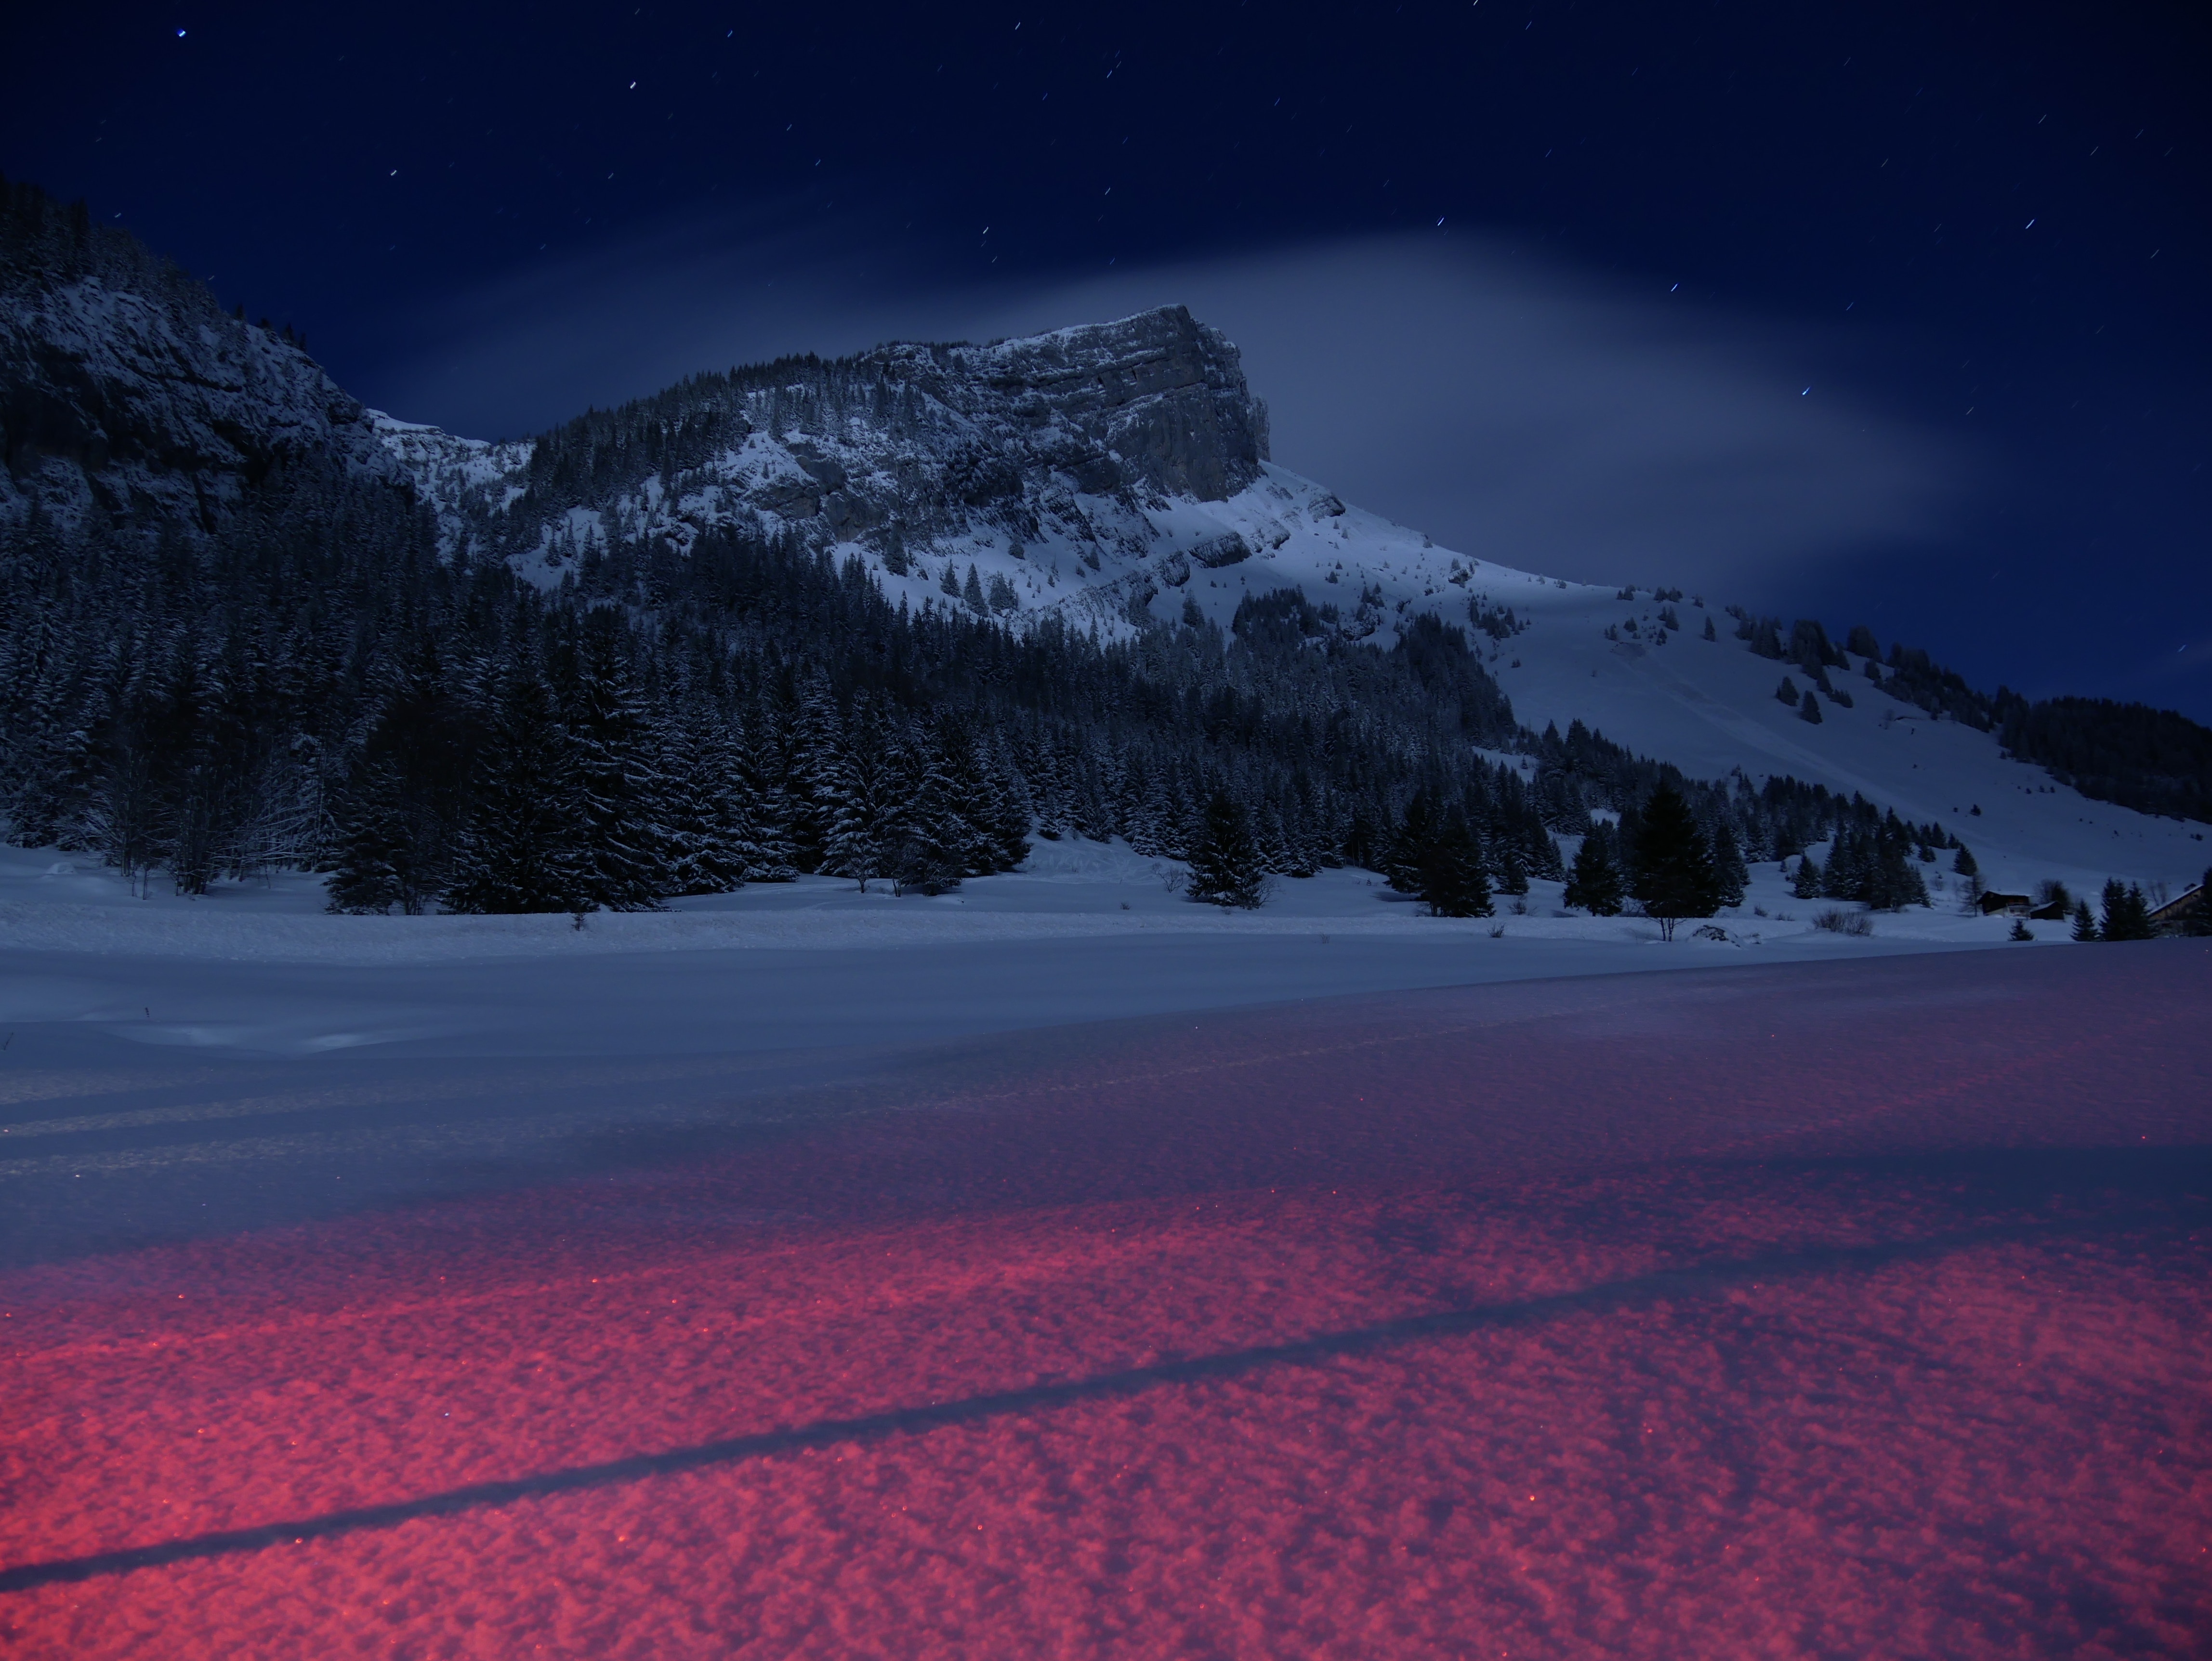 General 4592x3448 landscape night snow winter mountains